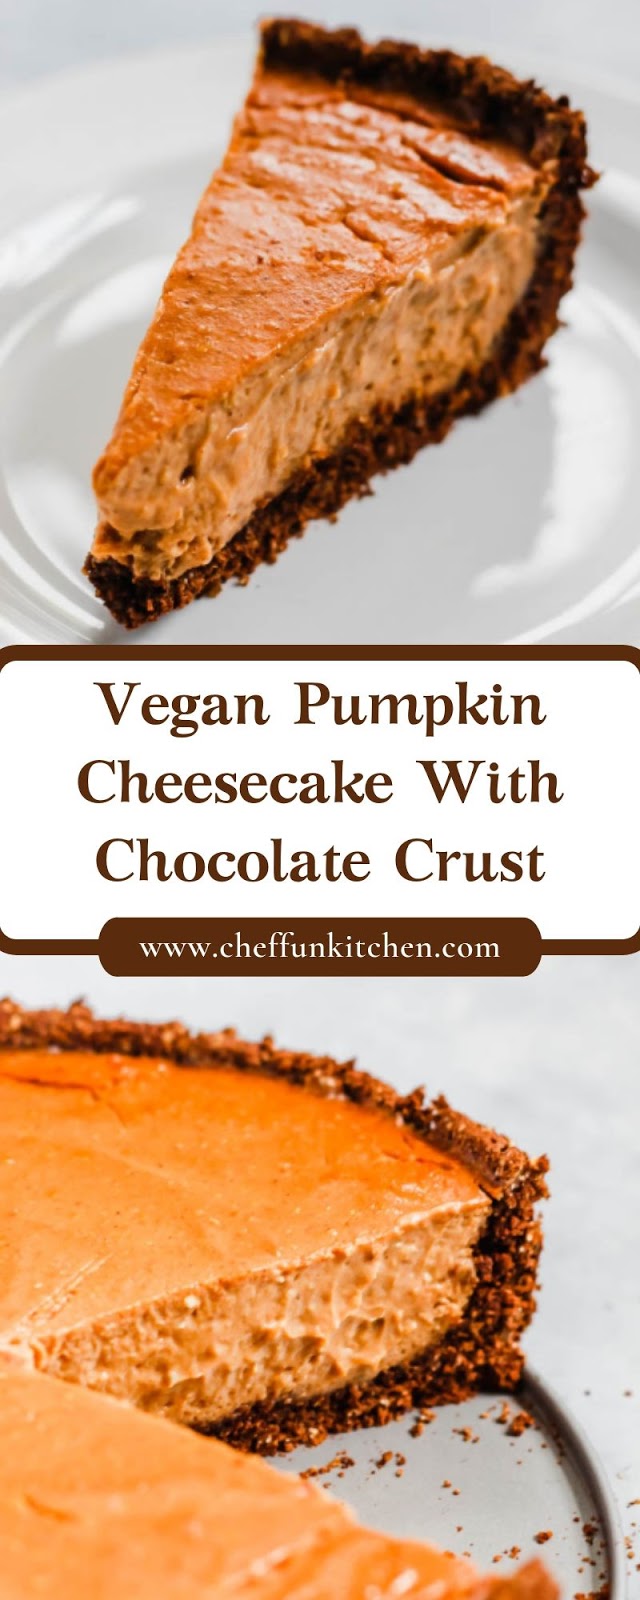 Vegan Pumpkin Cheesecake With Chocolate Crust